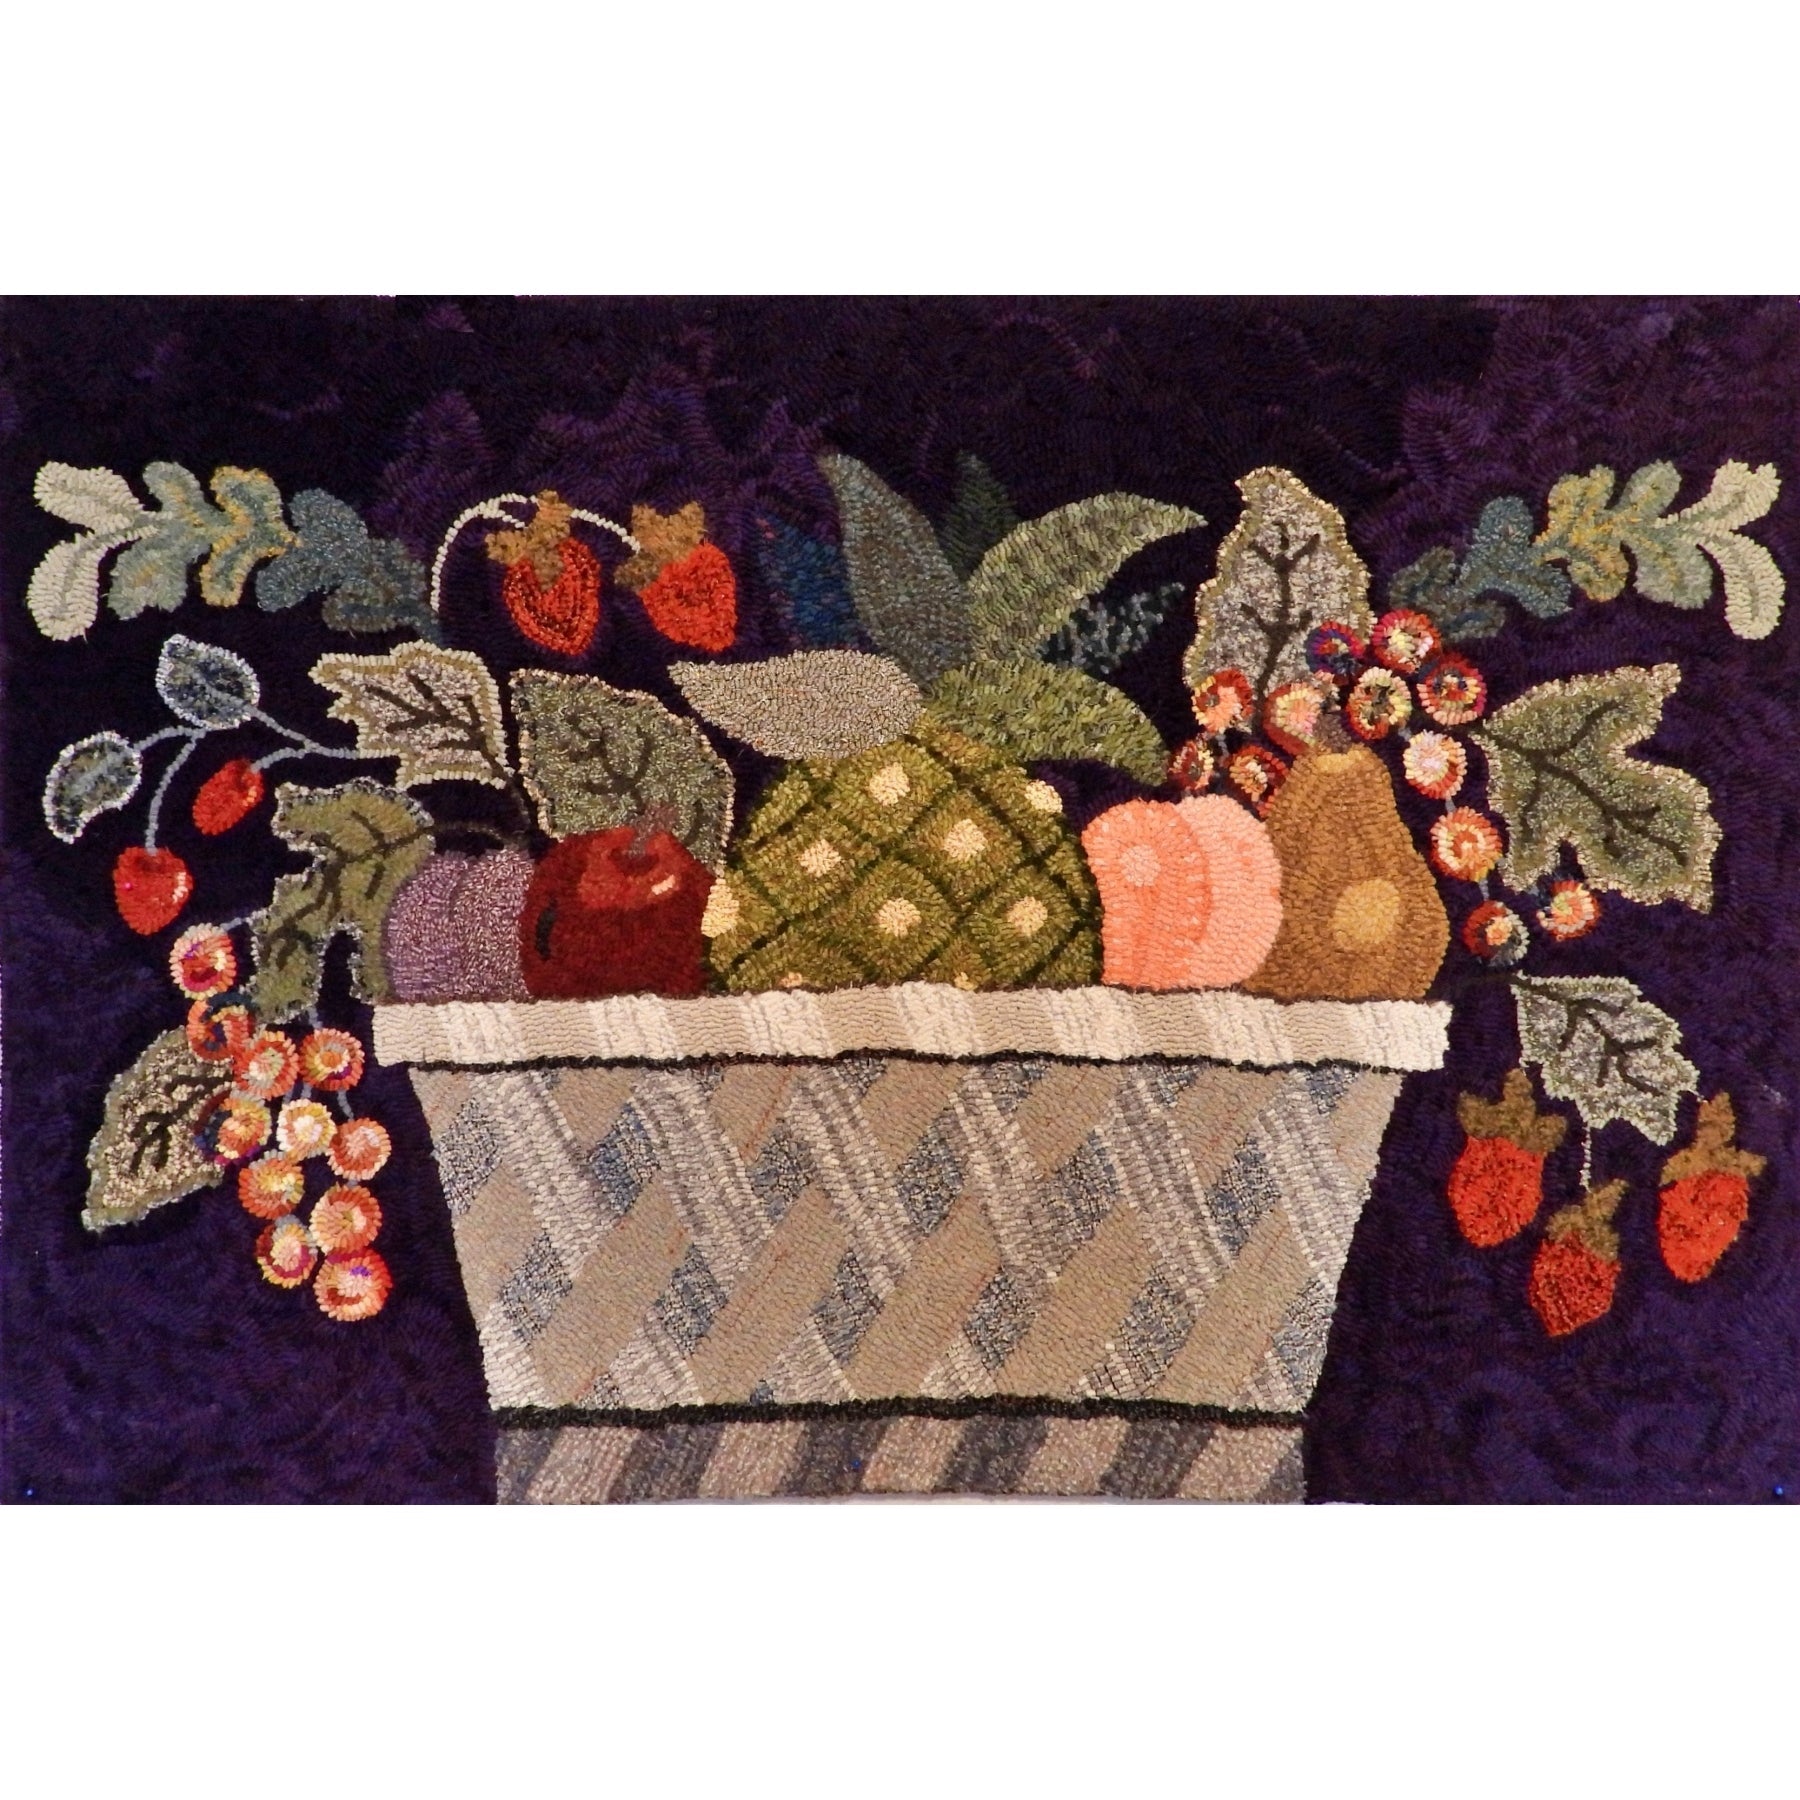 Caswell Fruit Basket, rug hooked by Sondra Kellar